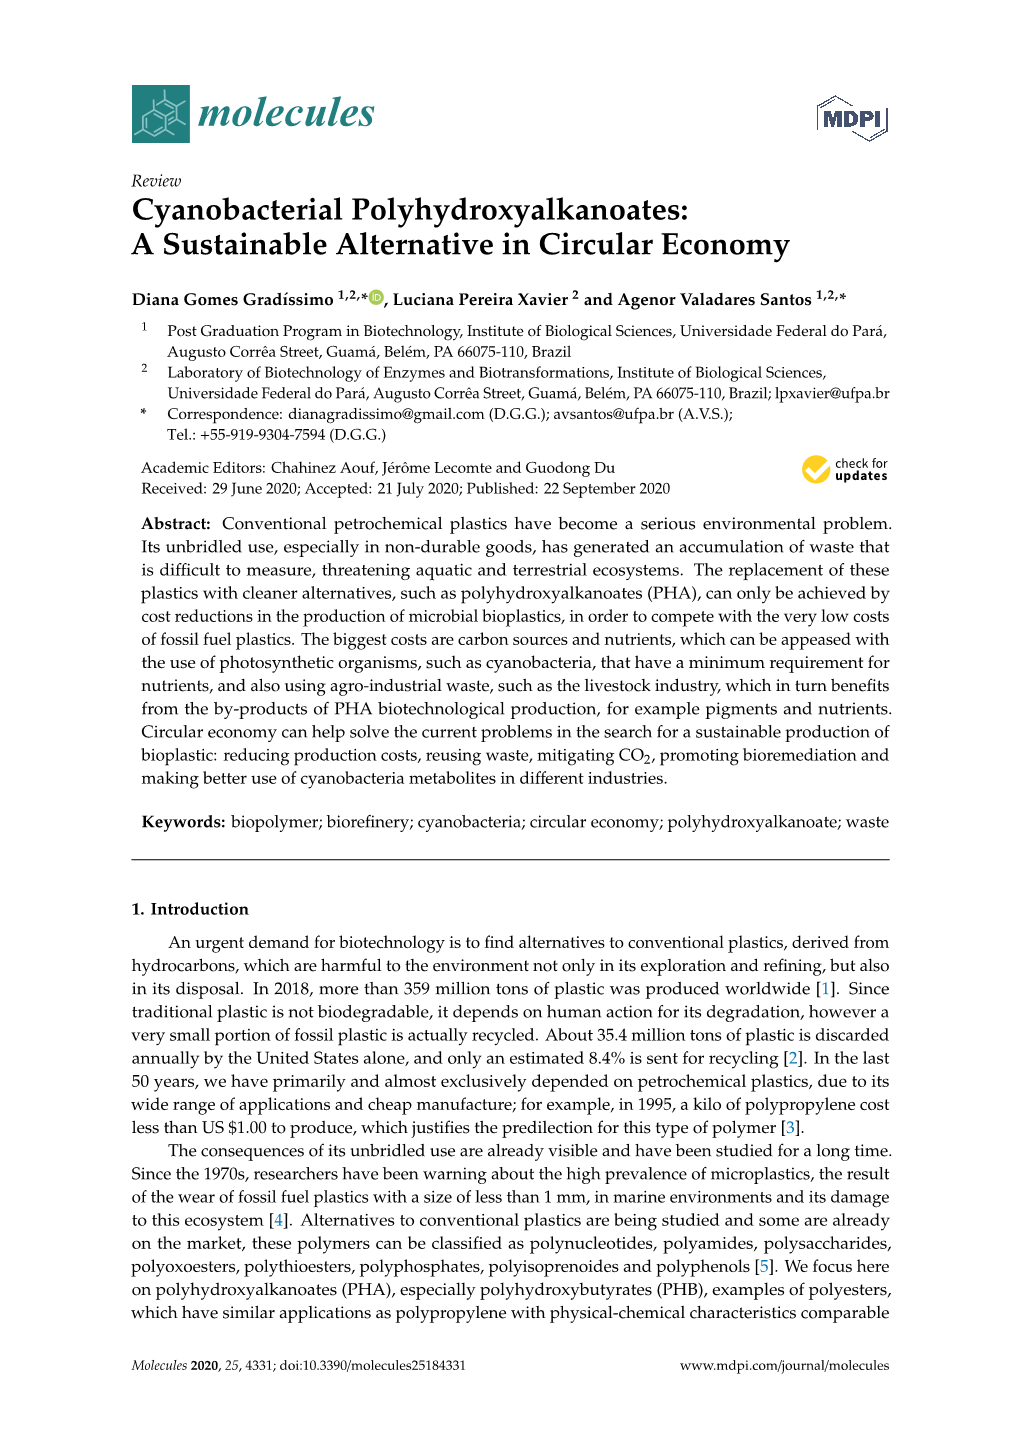 Cyanobacterial Polyhydroxyalkanoates: a Sustainable Alternative in Circular Economy